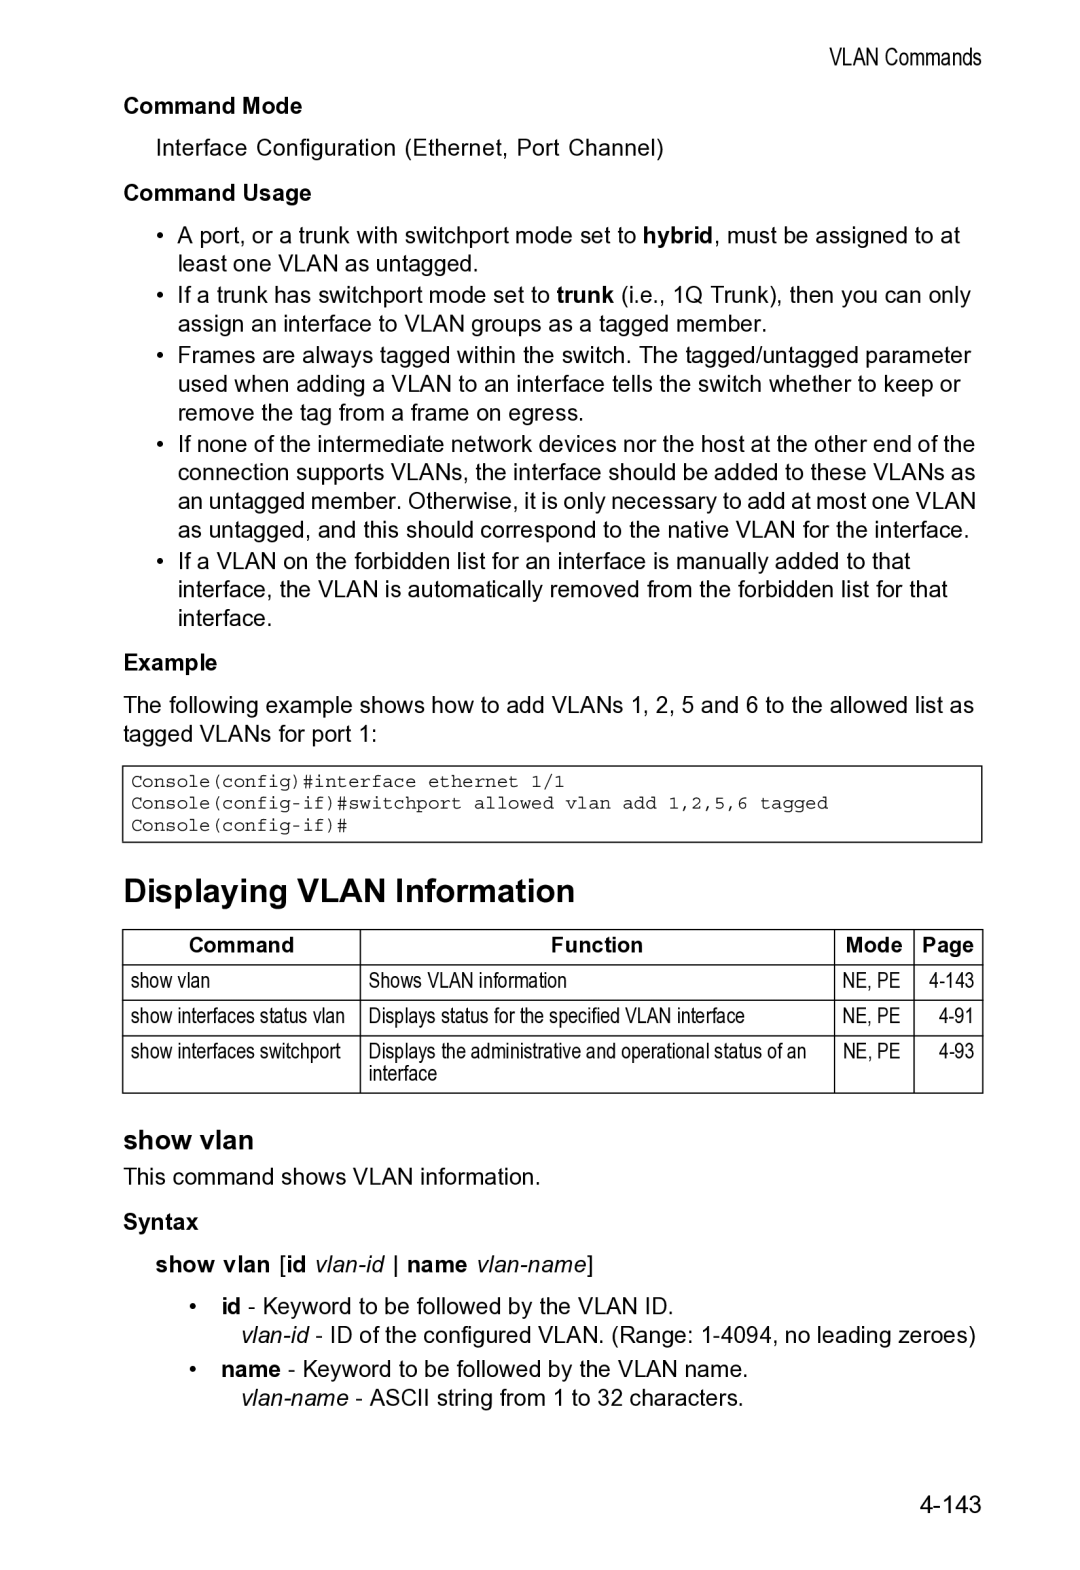 Accton Technology VS4512DC manual Displaying Vlan Information, Syntax Show vlan id vlan-idname vlan-name 